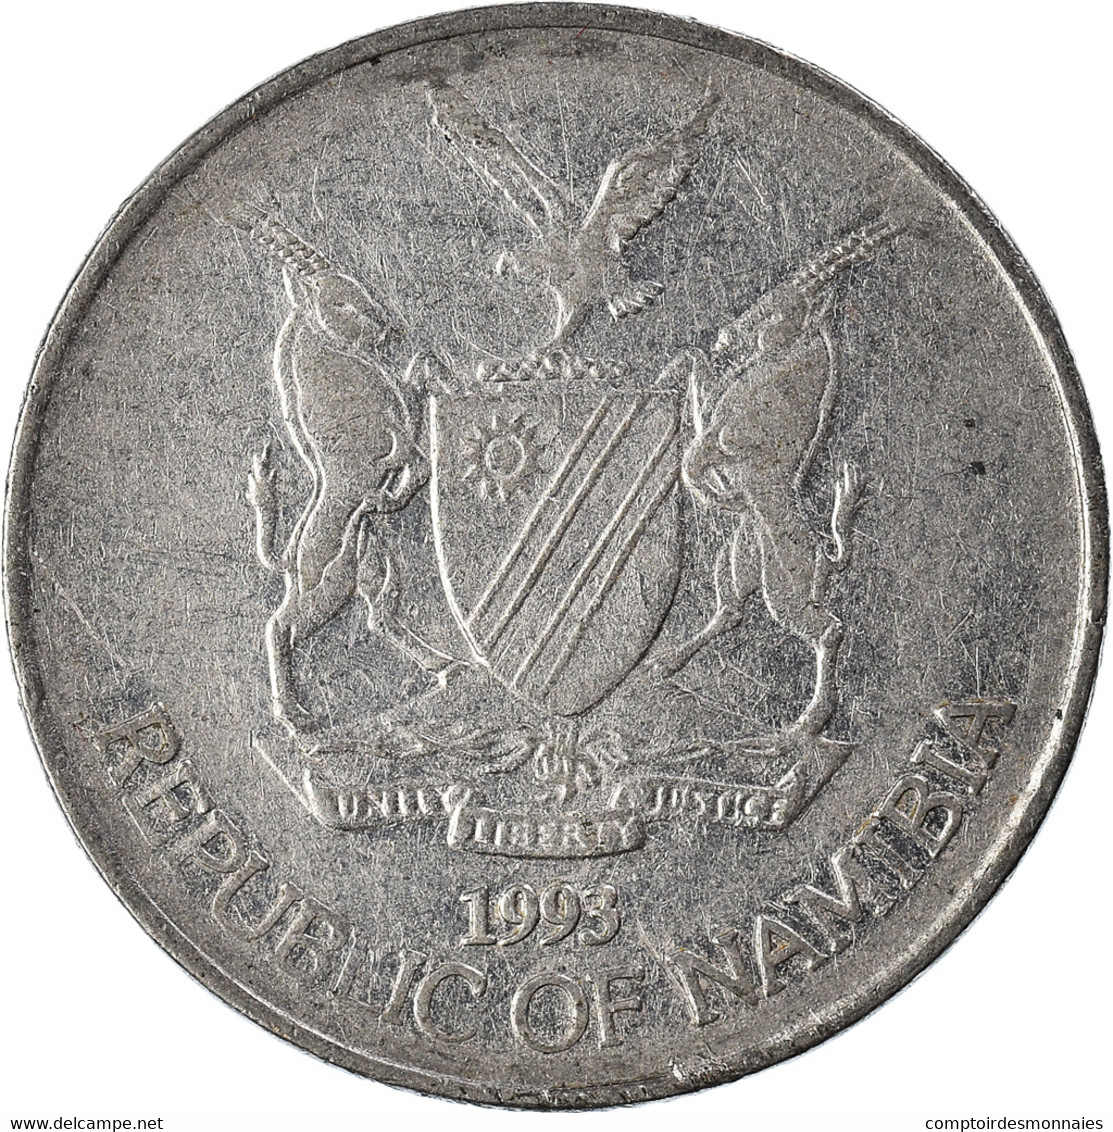 Monnaie, Namibie, 50 Cents, 1993 - Namibia